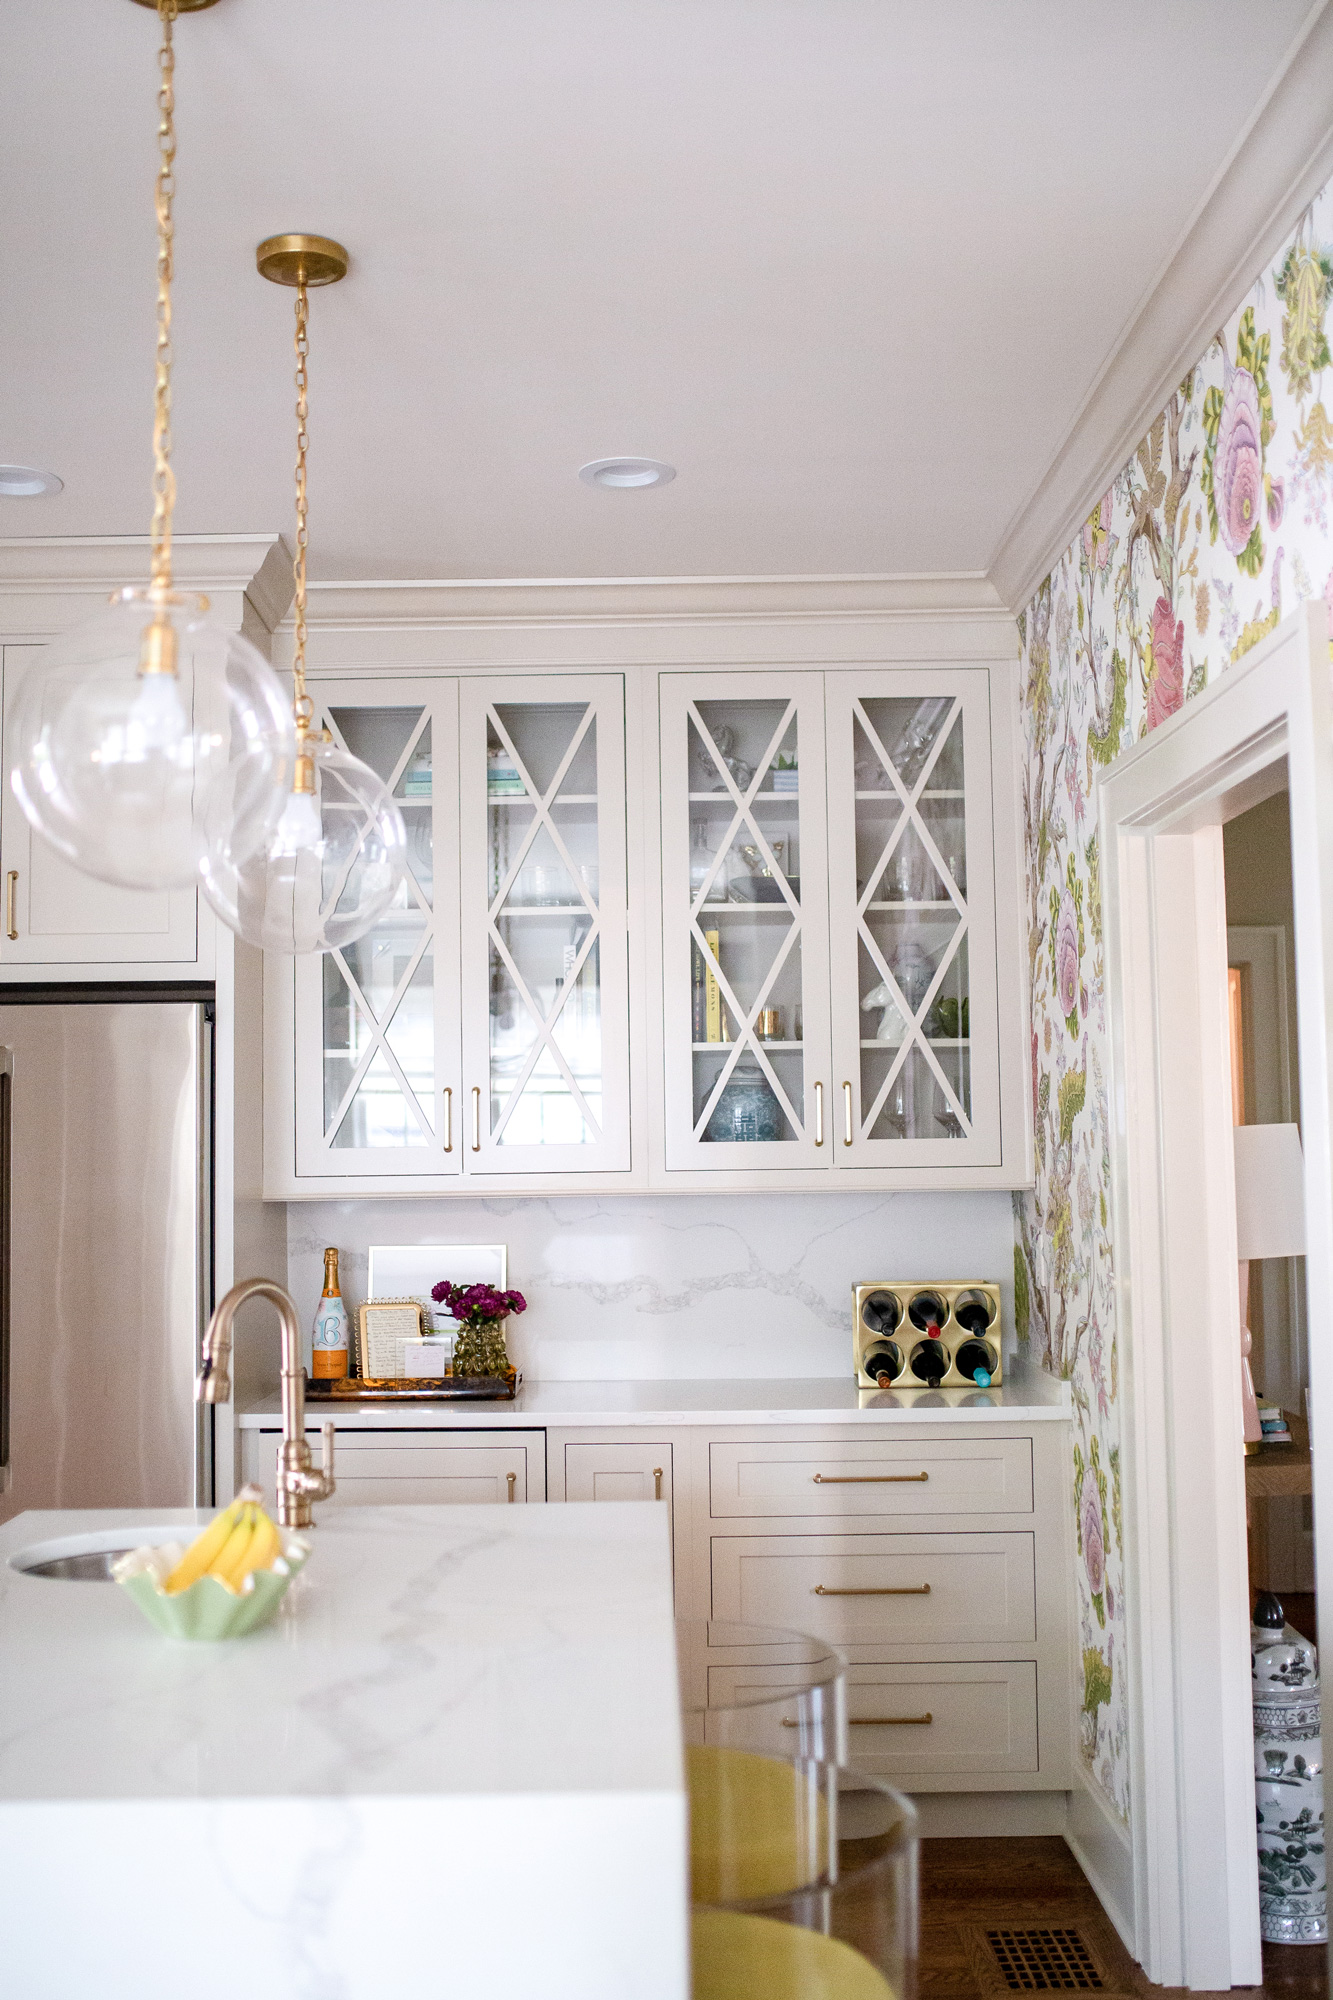 Details! - transitional - Kitchen Cabinets - Other Metro - JW Kitchens -  Design for a Lifetime